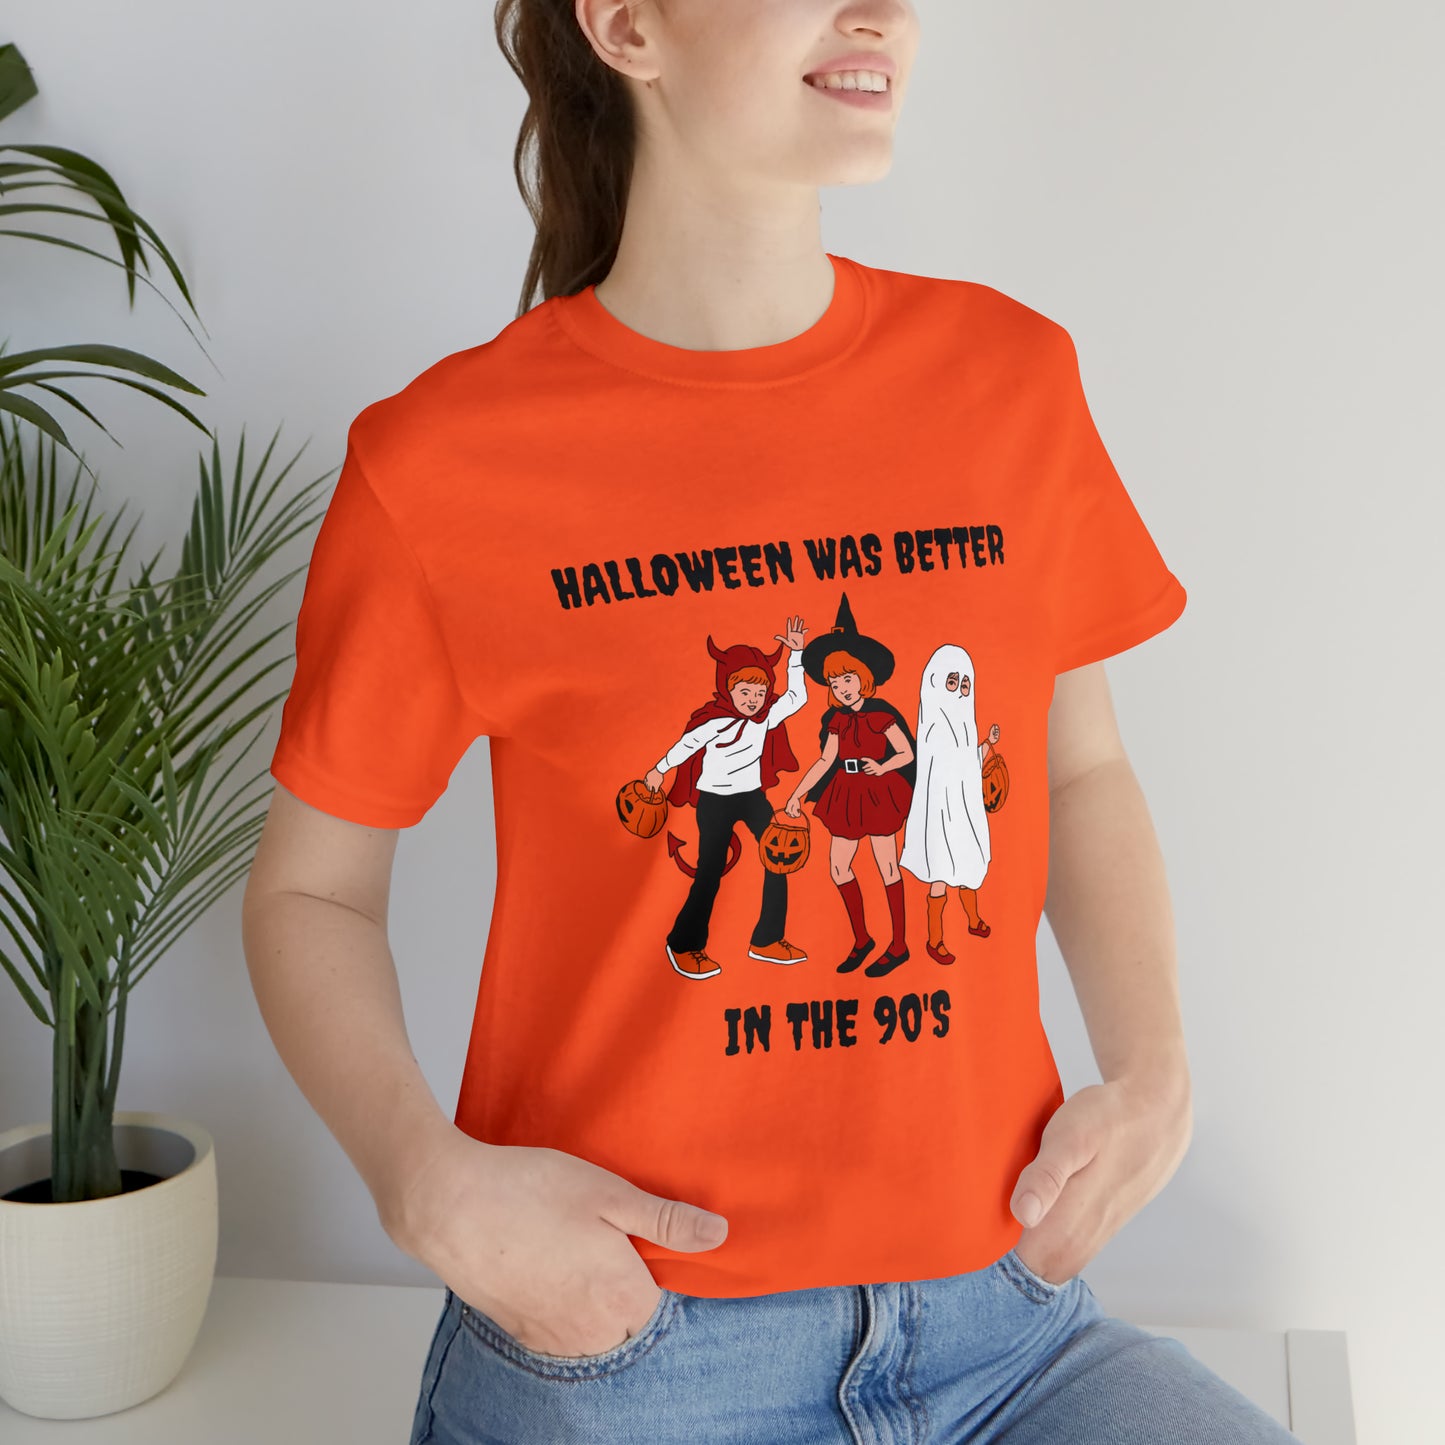 90s Halloween Shirt, Vintage Halloween T-Shirt, Retro Halloween Shirt, Fall Shirt, 90's Halloween T-Shirt, Vintage Trick or Treat Shirt